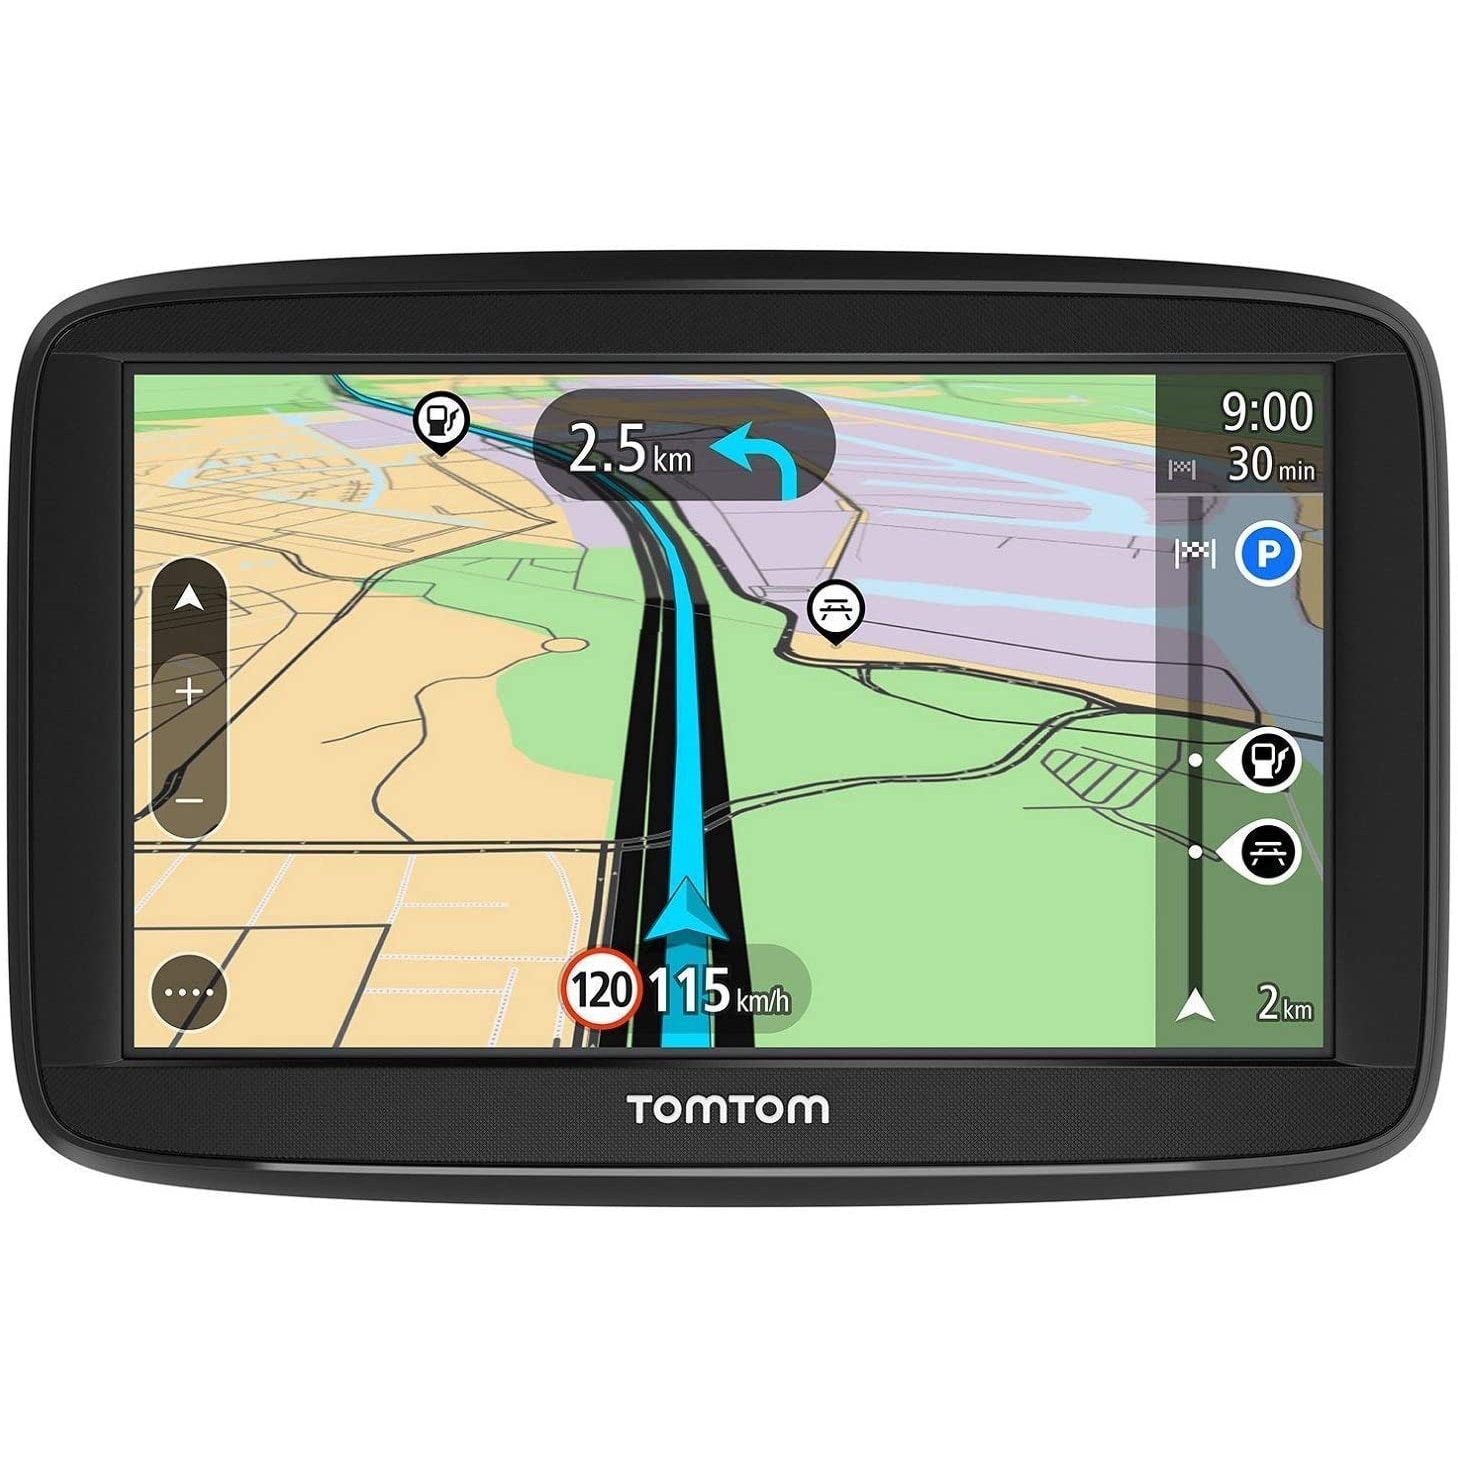 Sistem de navigatie TomTom Start 60, diagonale 6', Harta Full